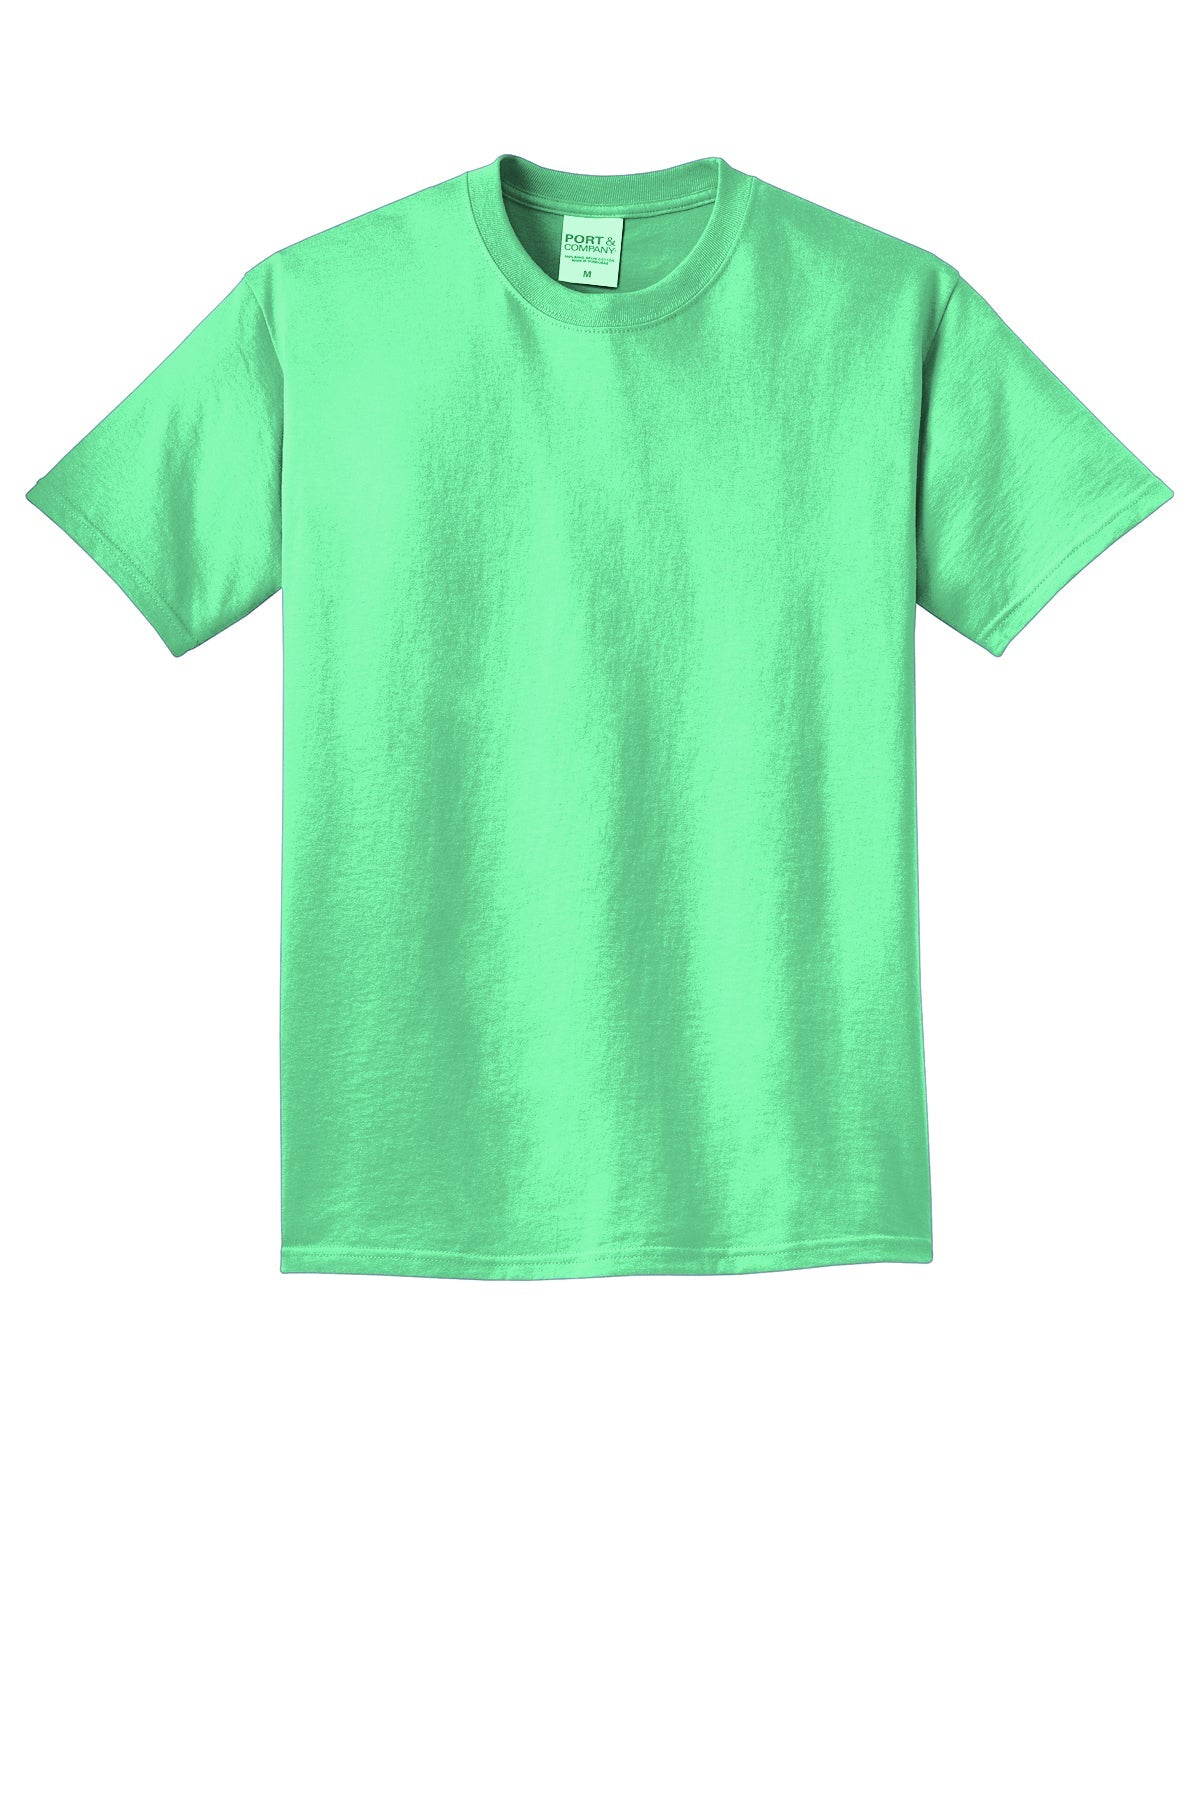 PC099 Port & Company® Beach Wash® Garment-Dyed Tee S-4XL